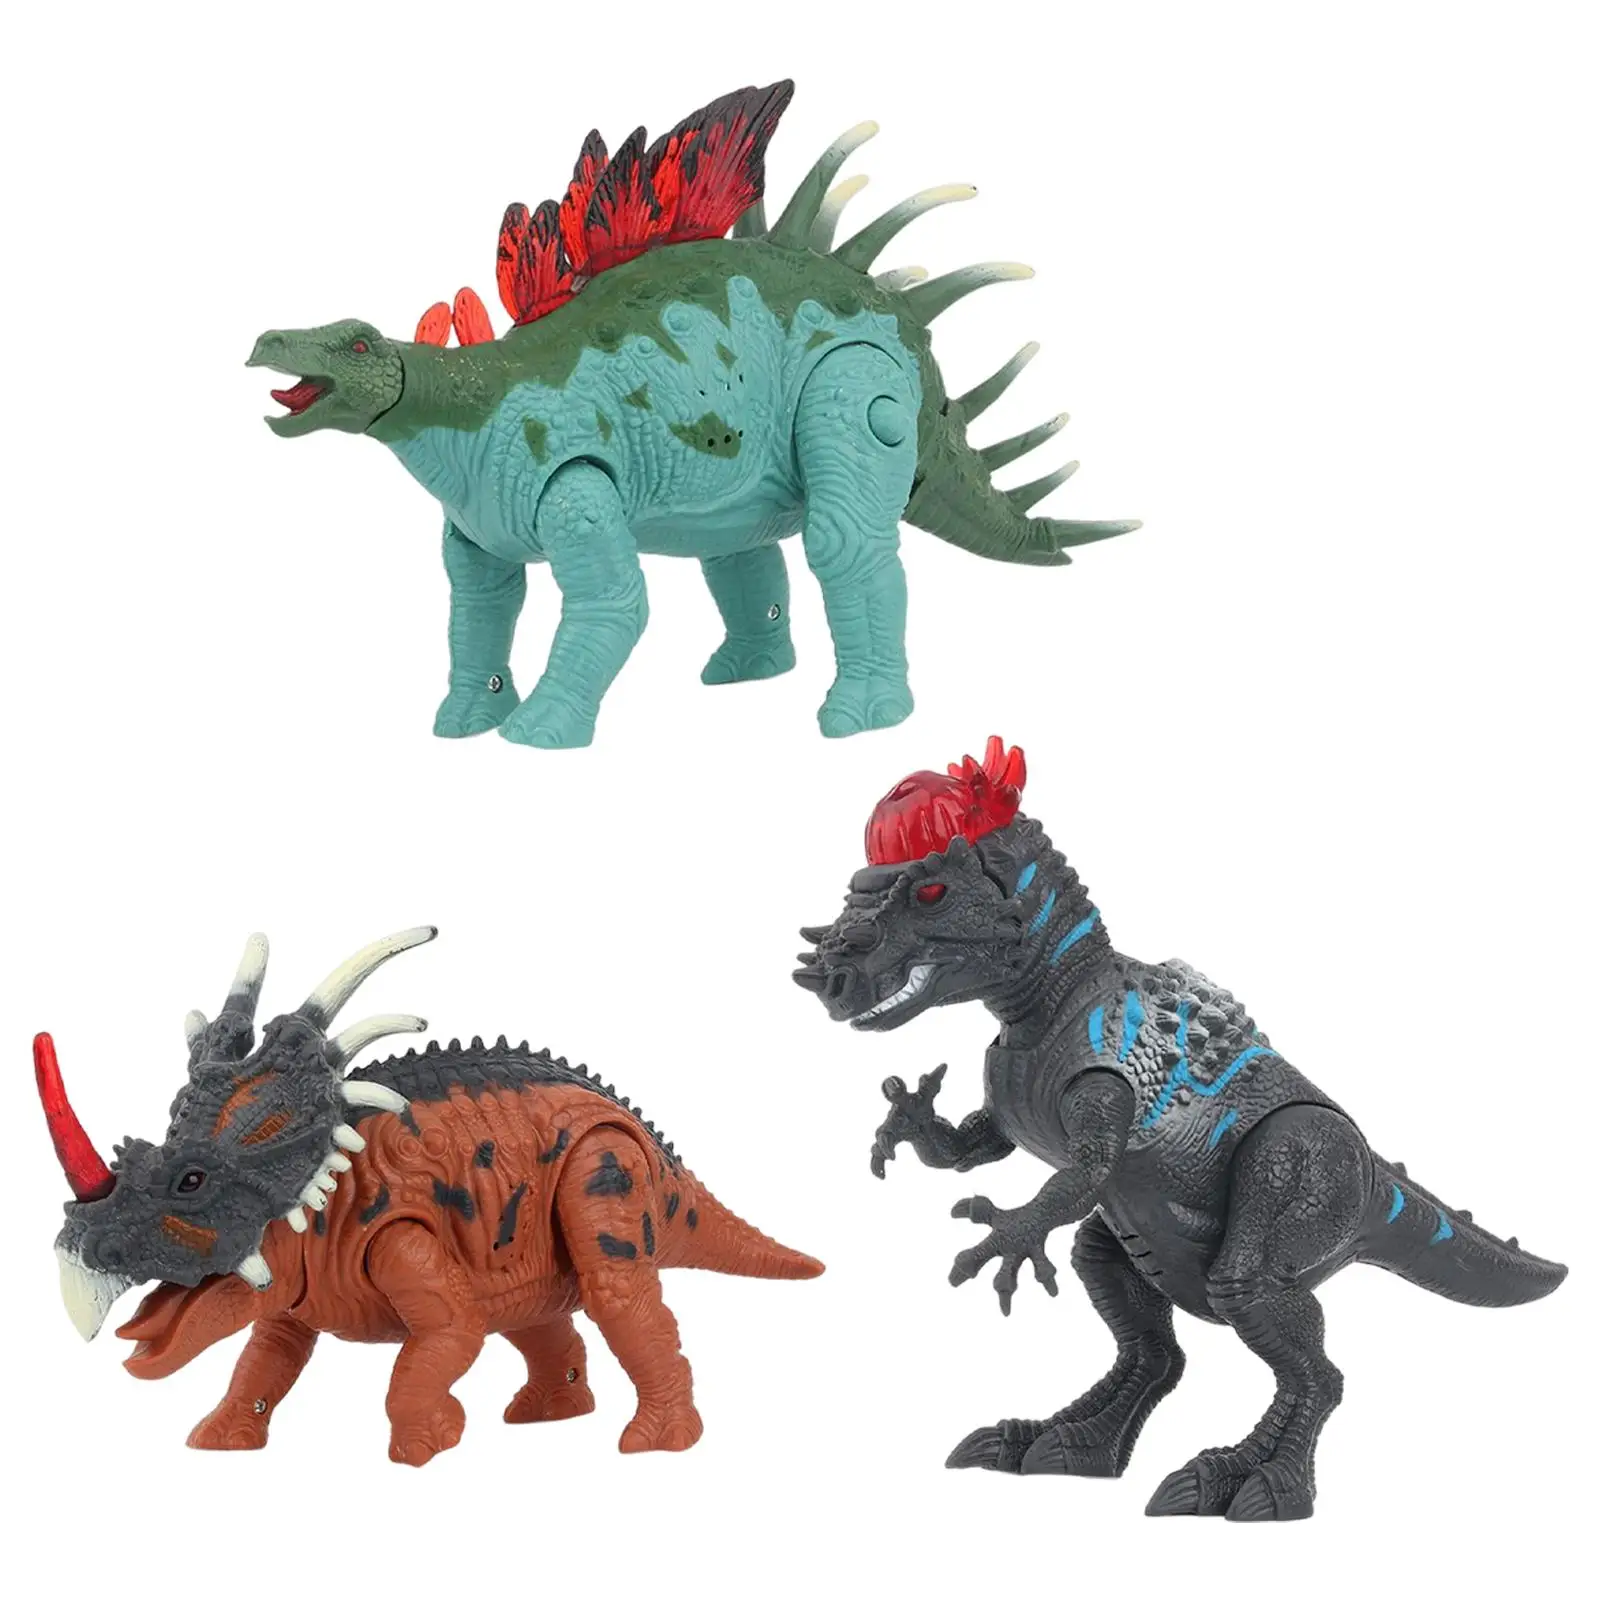 Electric Dinosaur Toys, Action Figure Simulation sound Lighting Movable Dinosaur Model Dinosaur Toy for Kids, for kids 5, 4 7,8